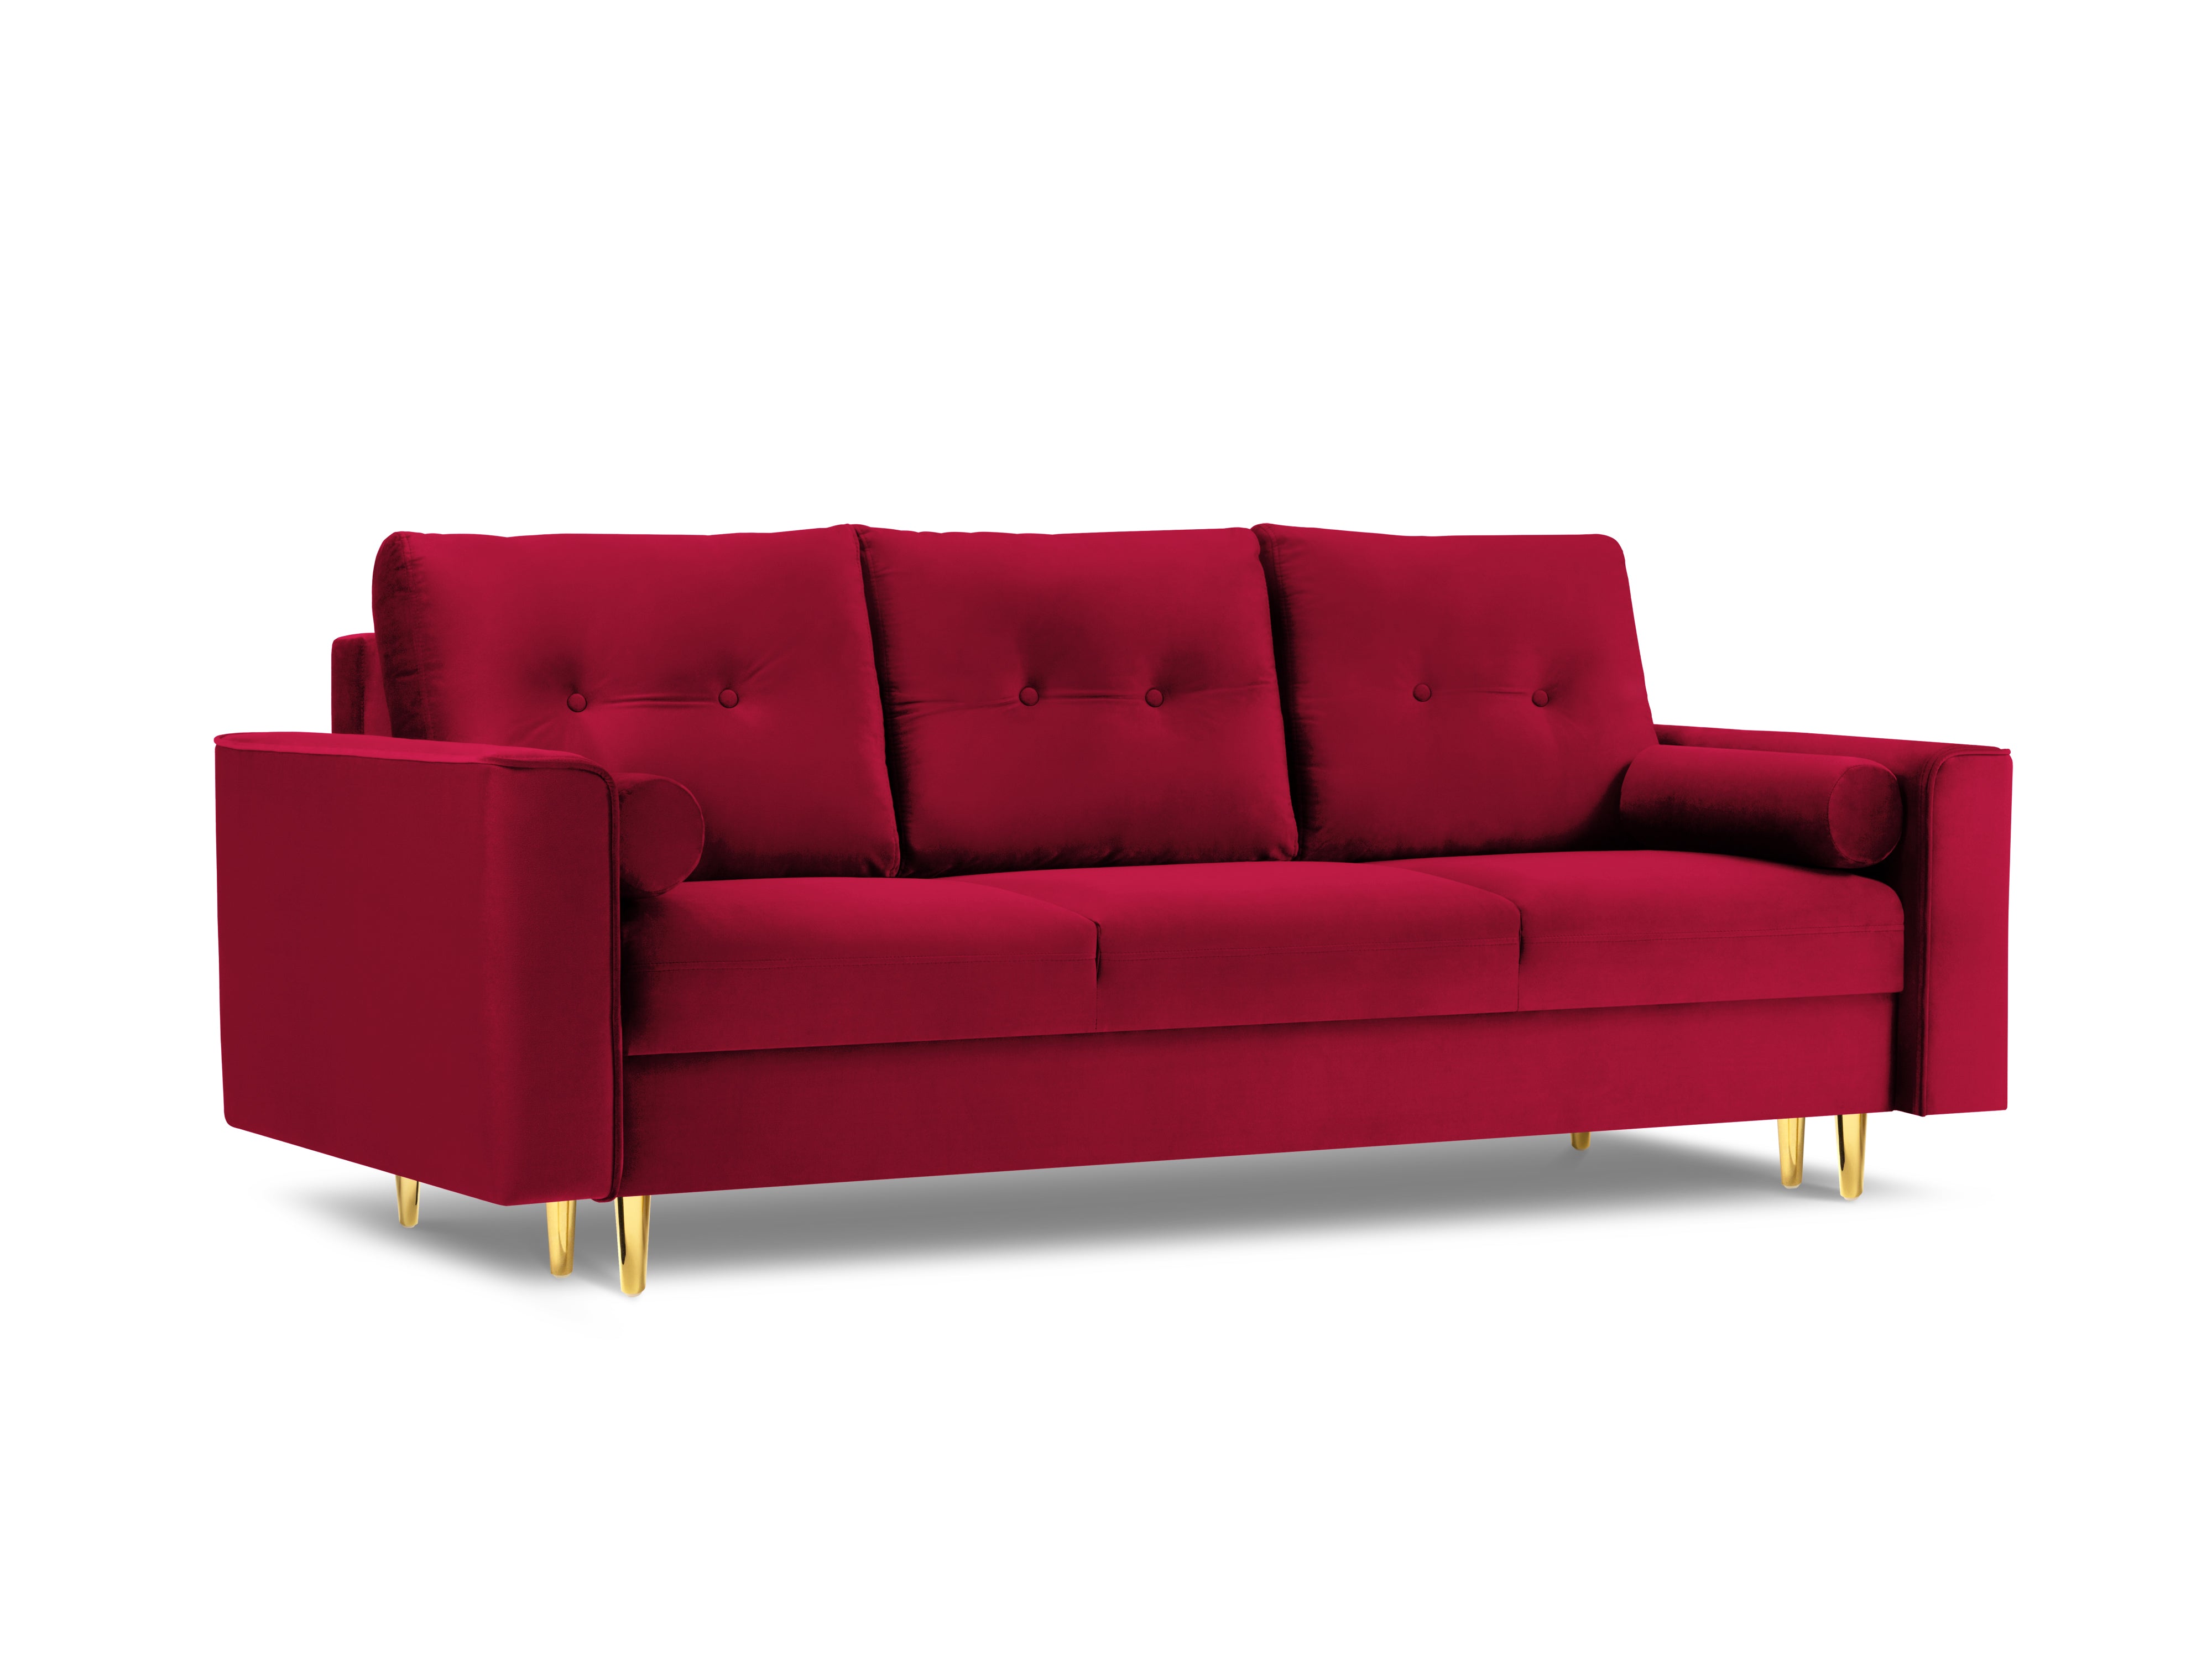 Leon red sofa